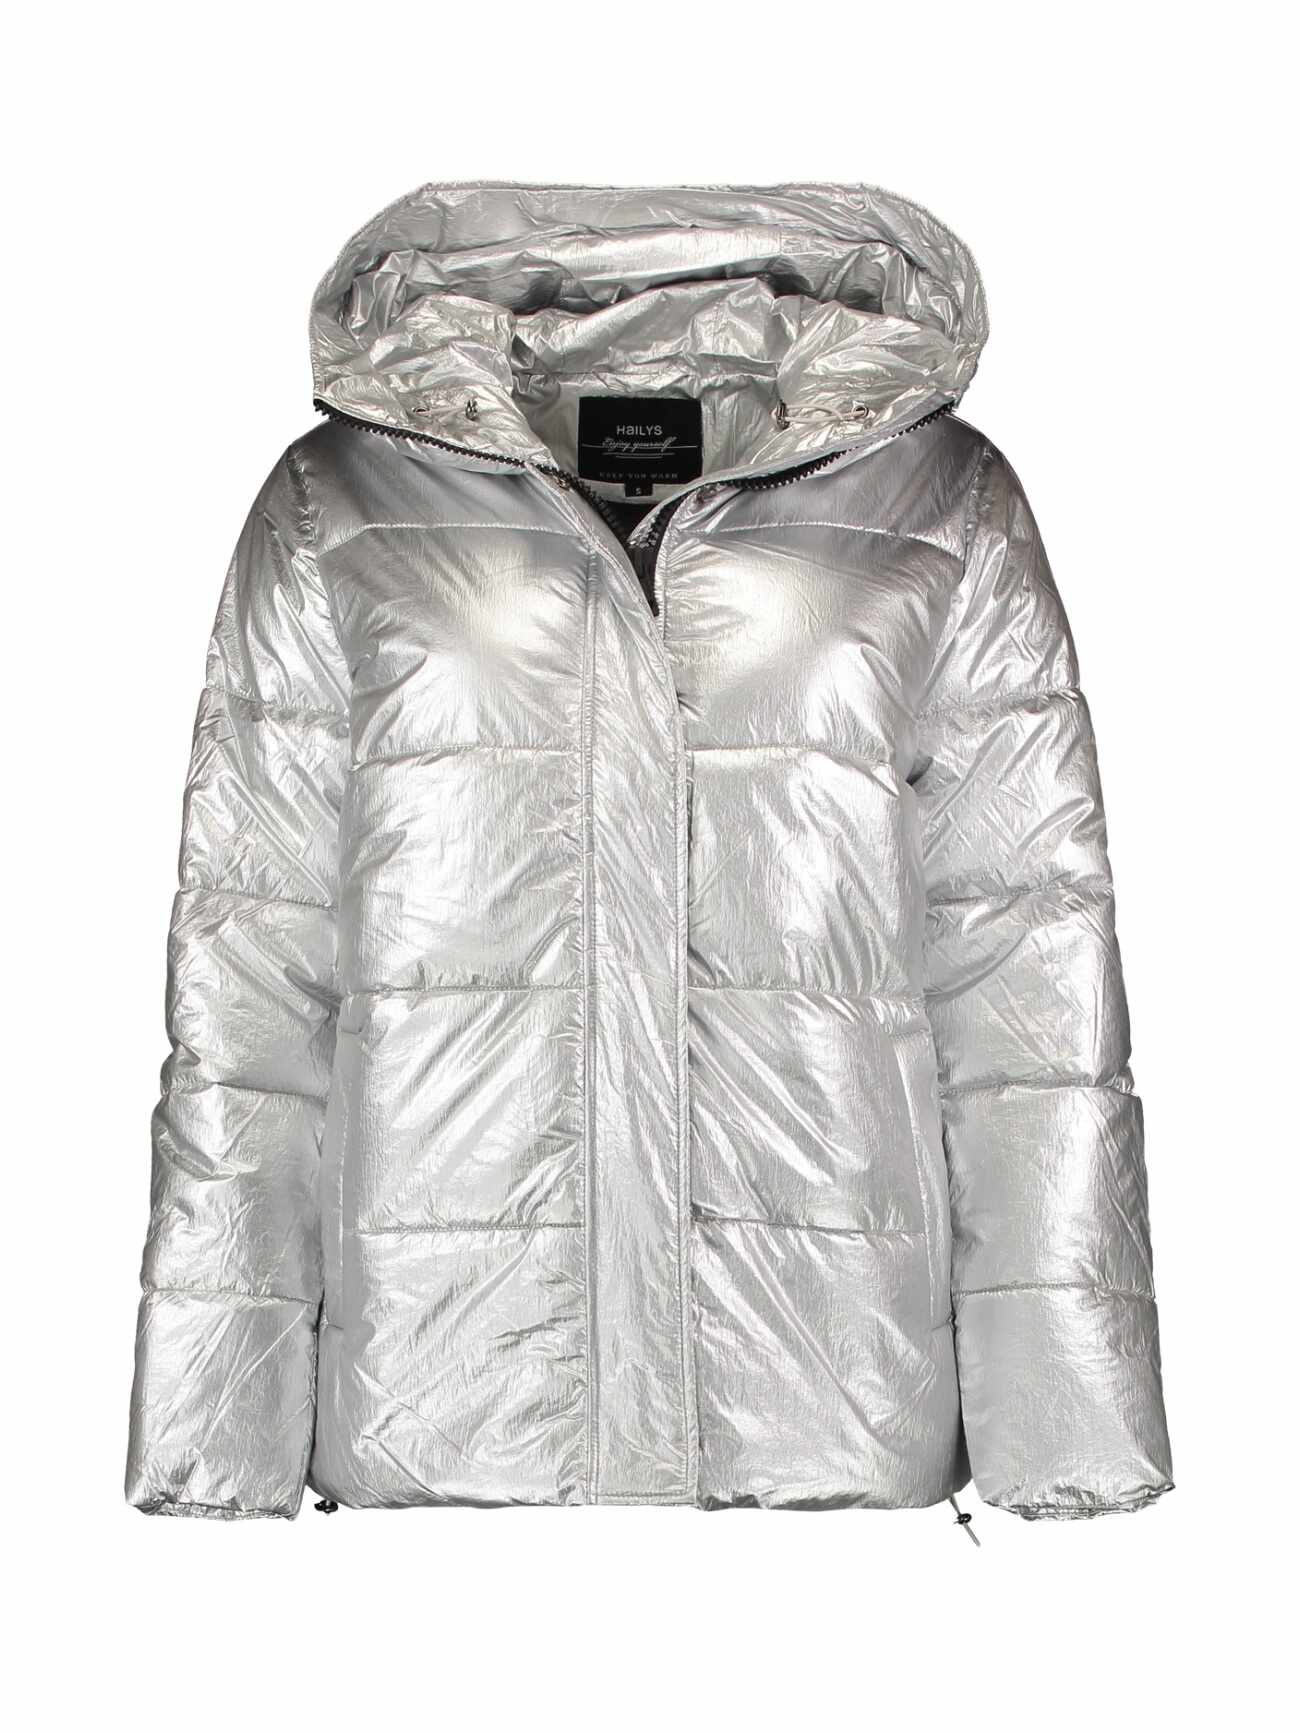 Geaca dama iarna, impermeabila, marca Hailys, culoare argintiu metalizat, cod DWE-2001002